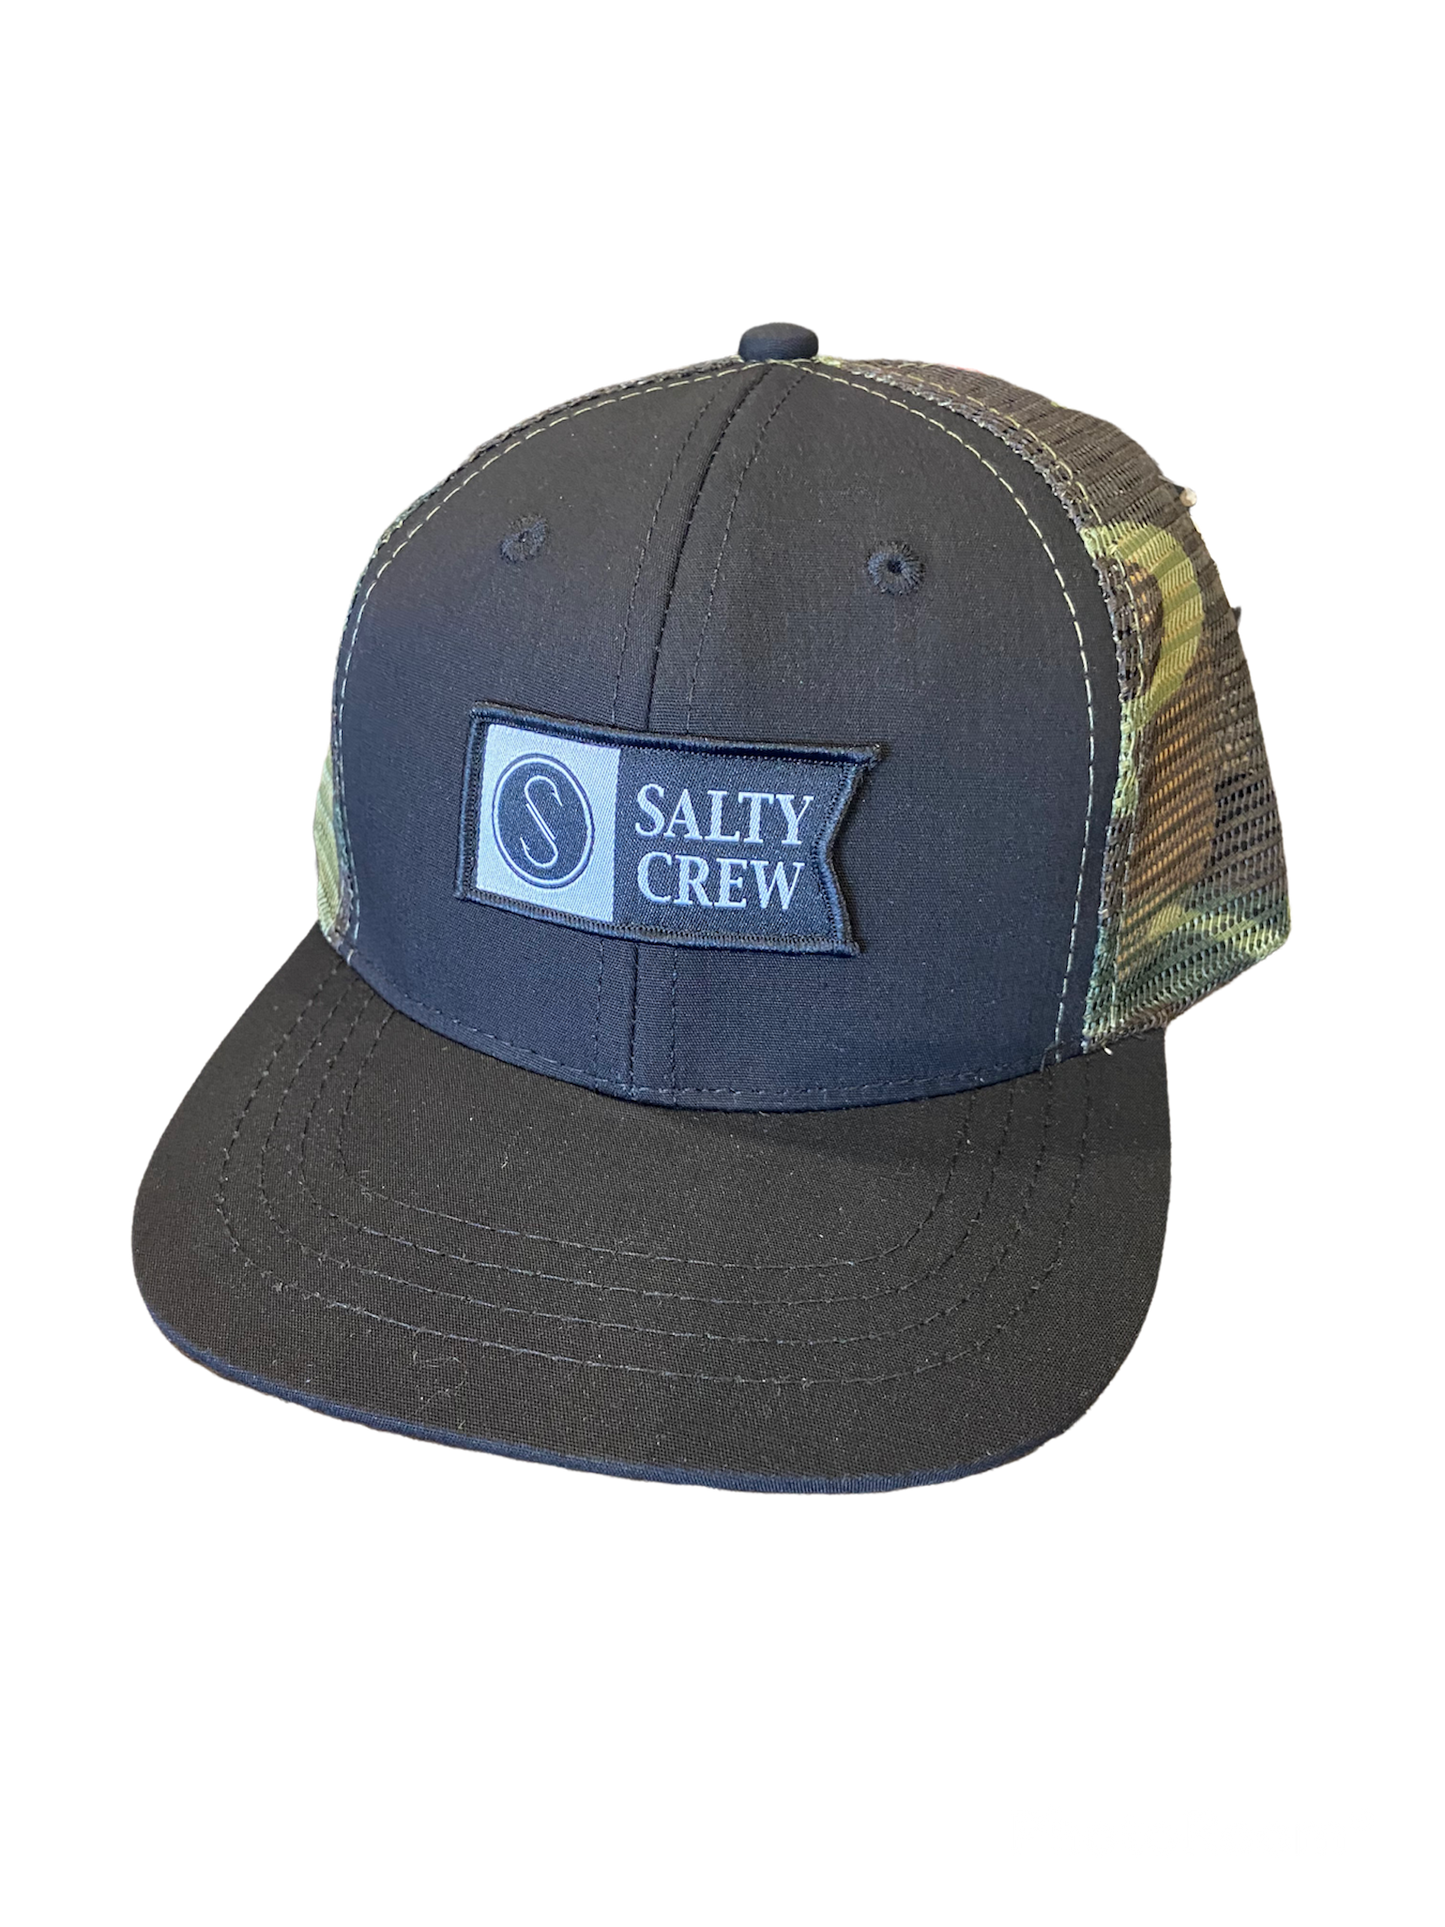 Salty Crew Pinnacle Boys Trucker Hat Hats Black Camo